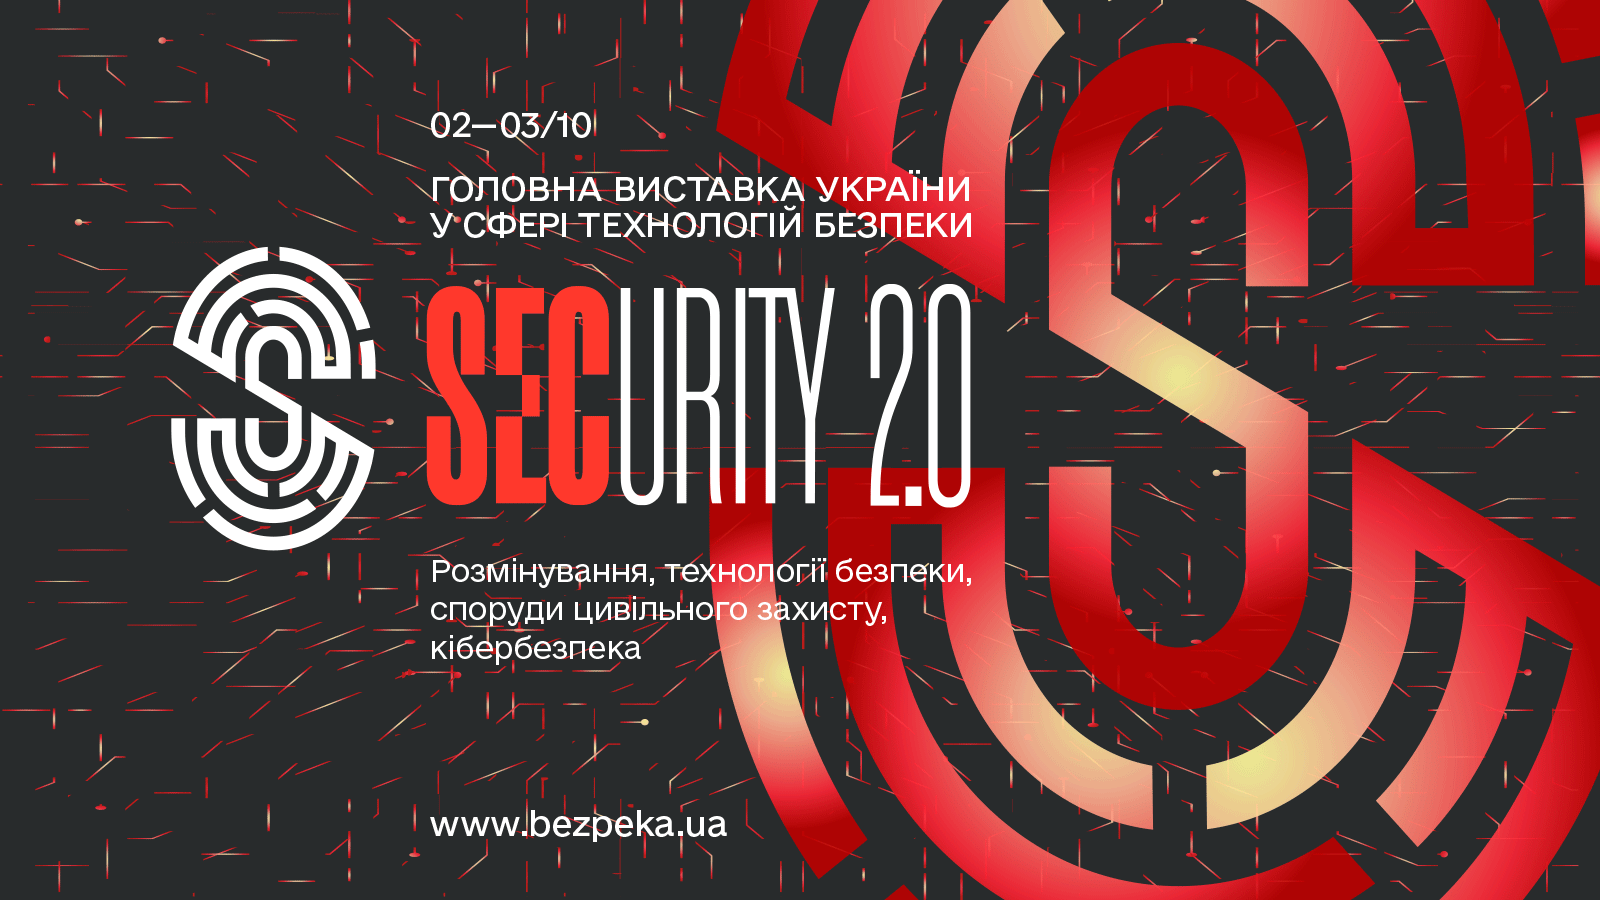 SECURITY 2.0